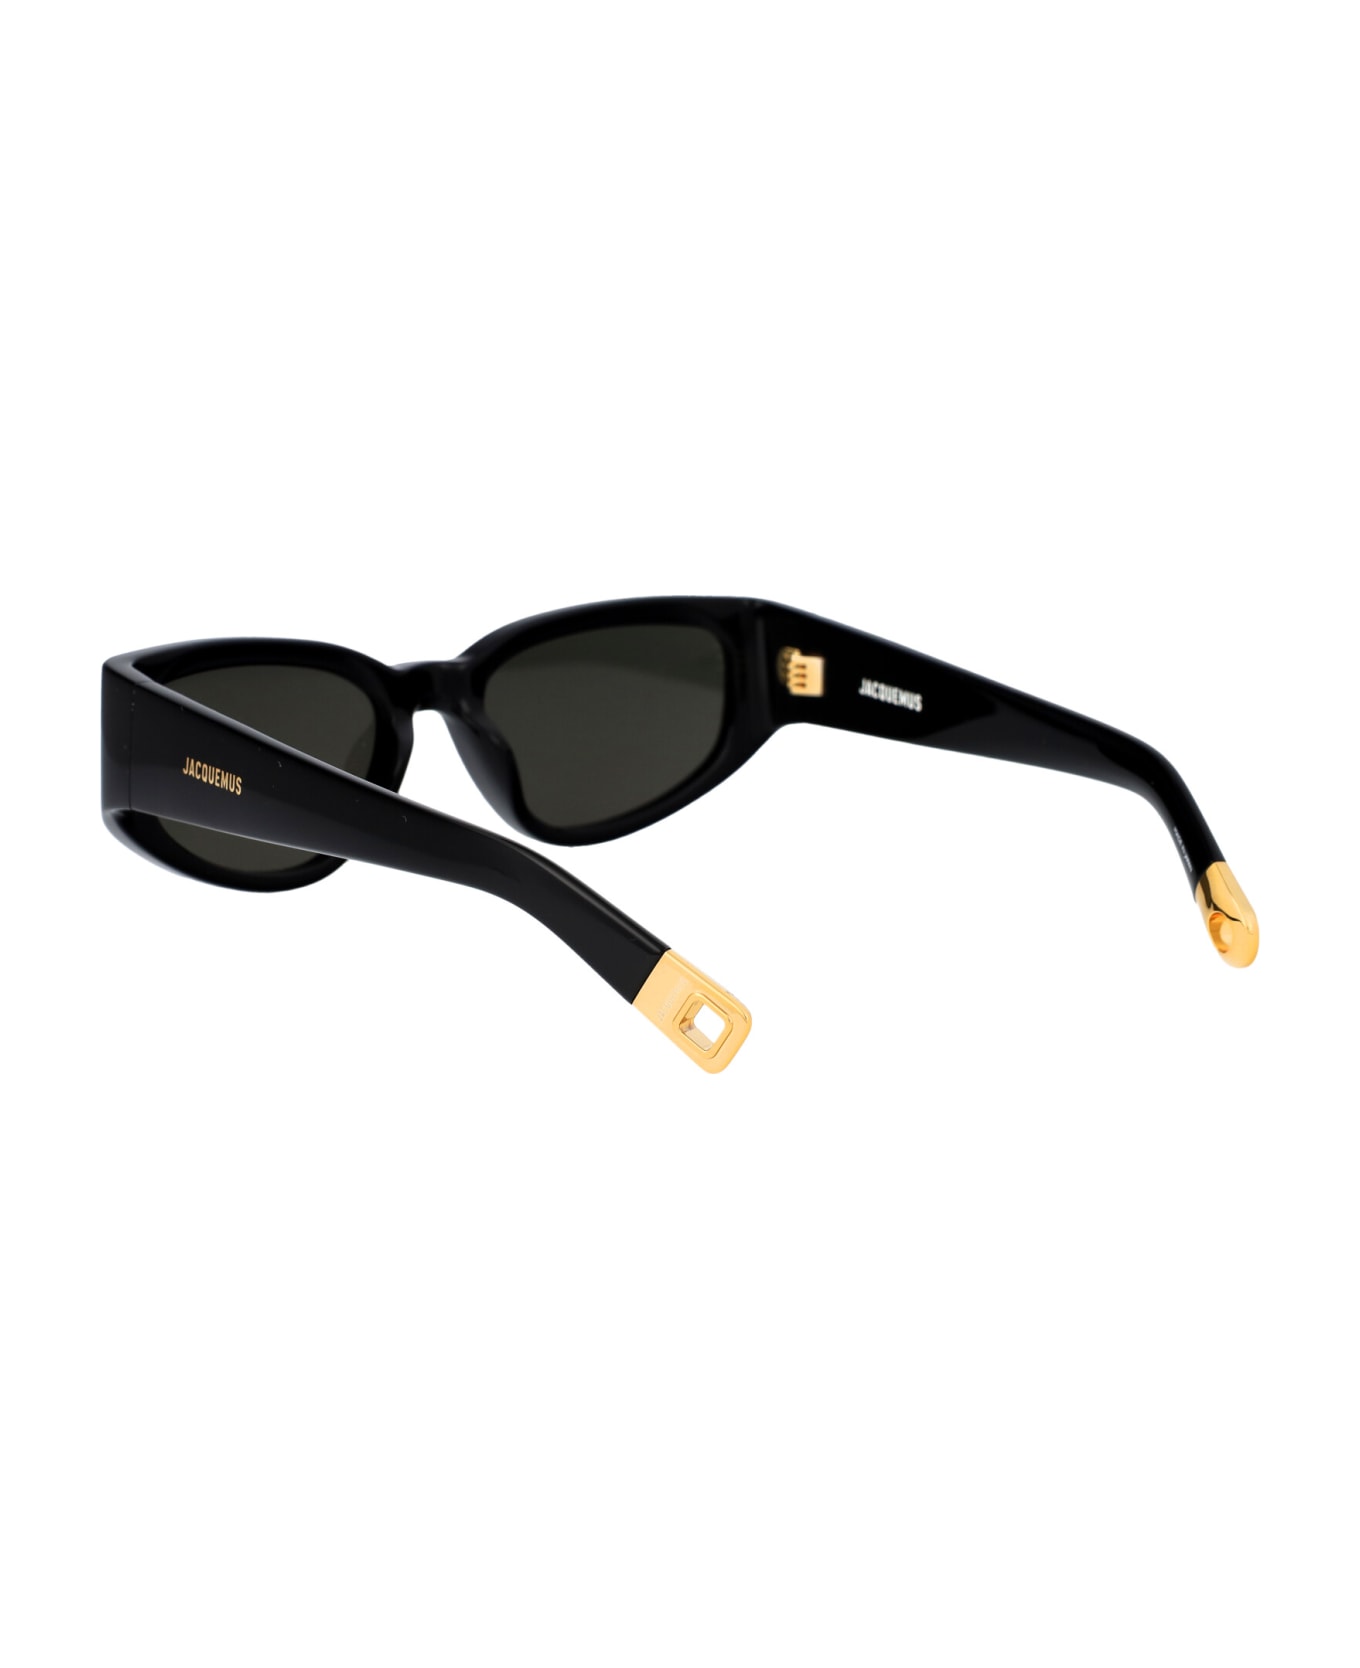 Jacquemus Gala Sunglasses - 01 BLACK/ YELLOW GOLD/ GREY サングラス